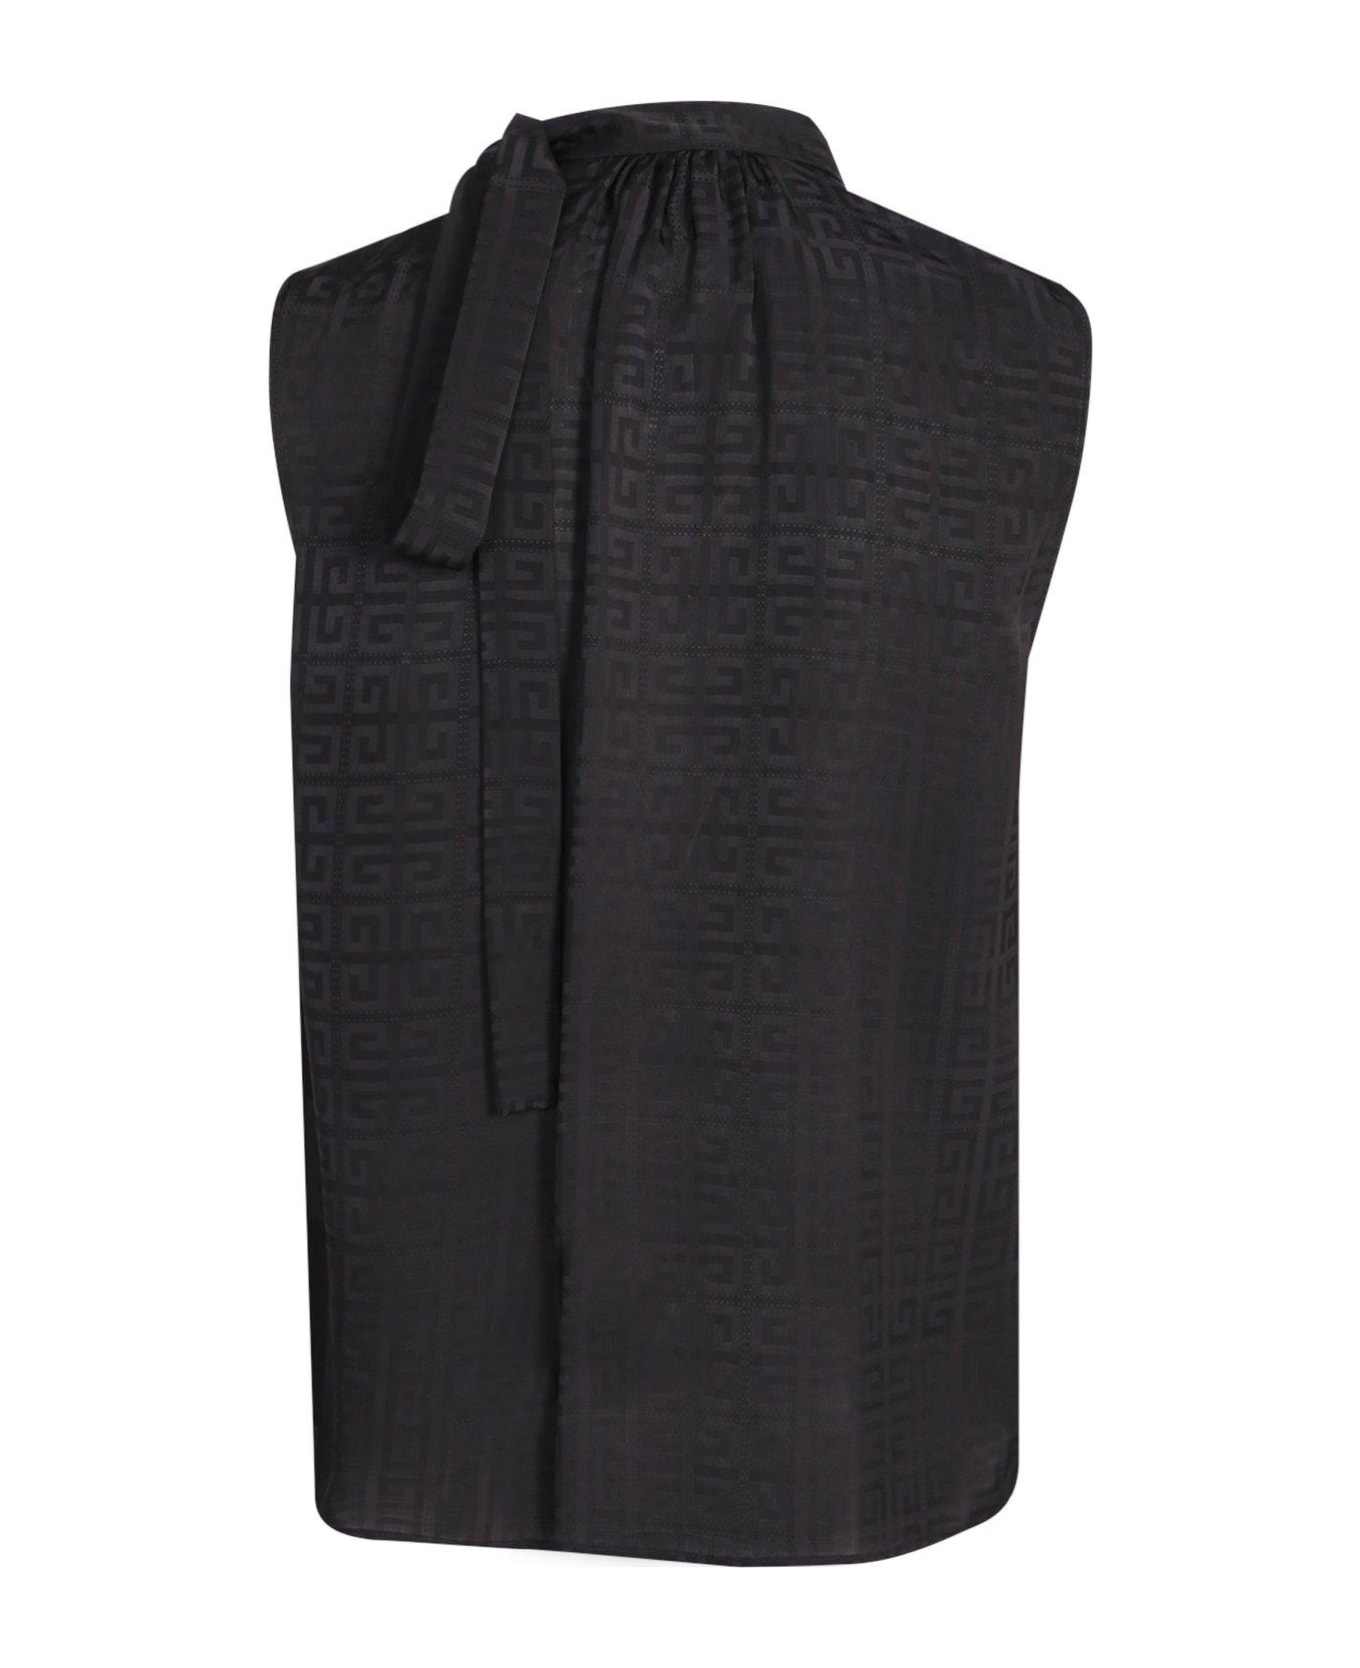 Givenchy Pattern Jacquard Sleeveless Top - Black